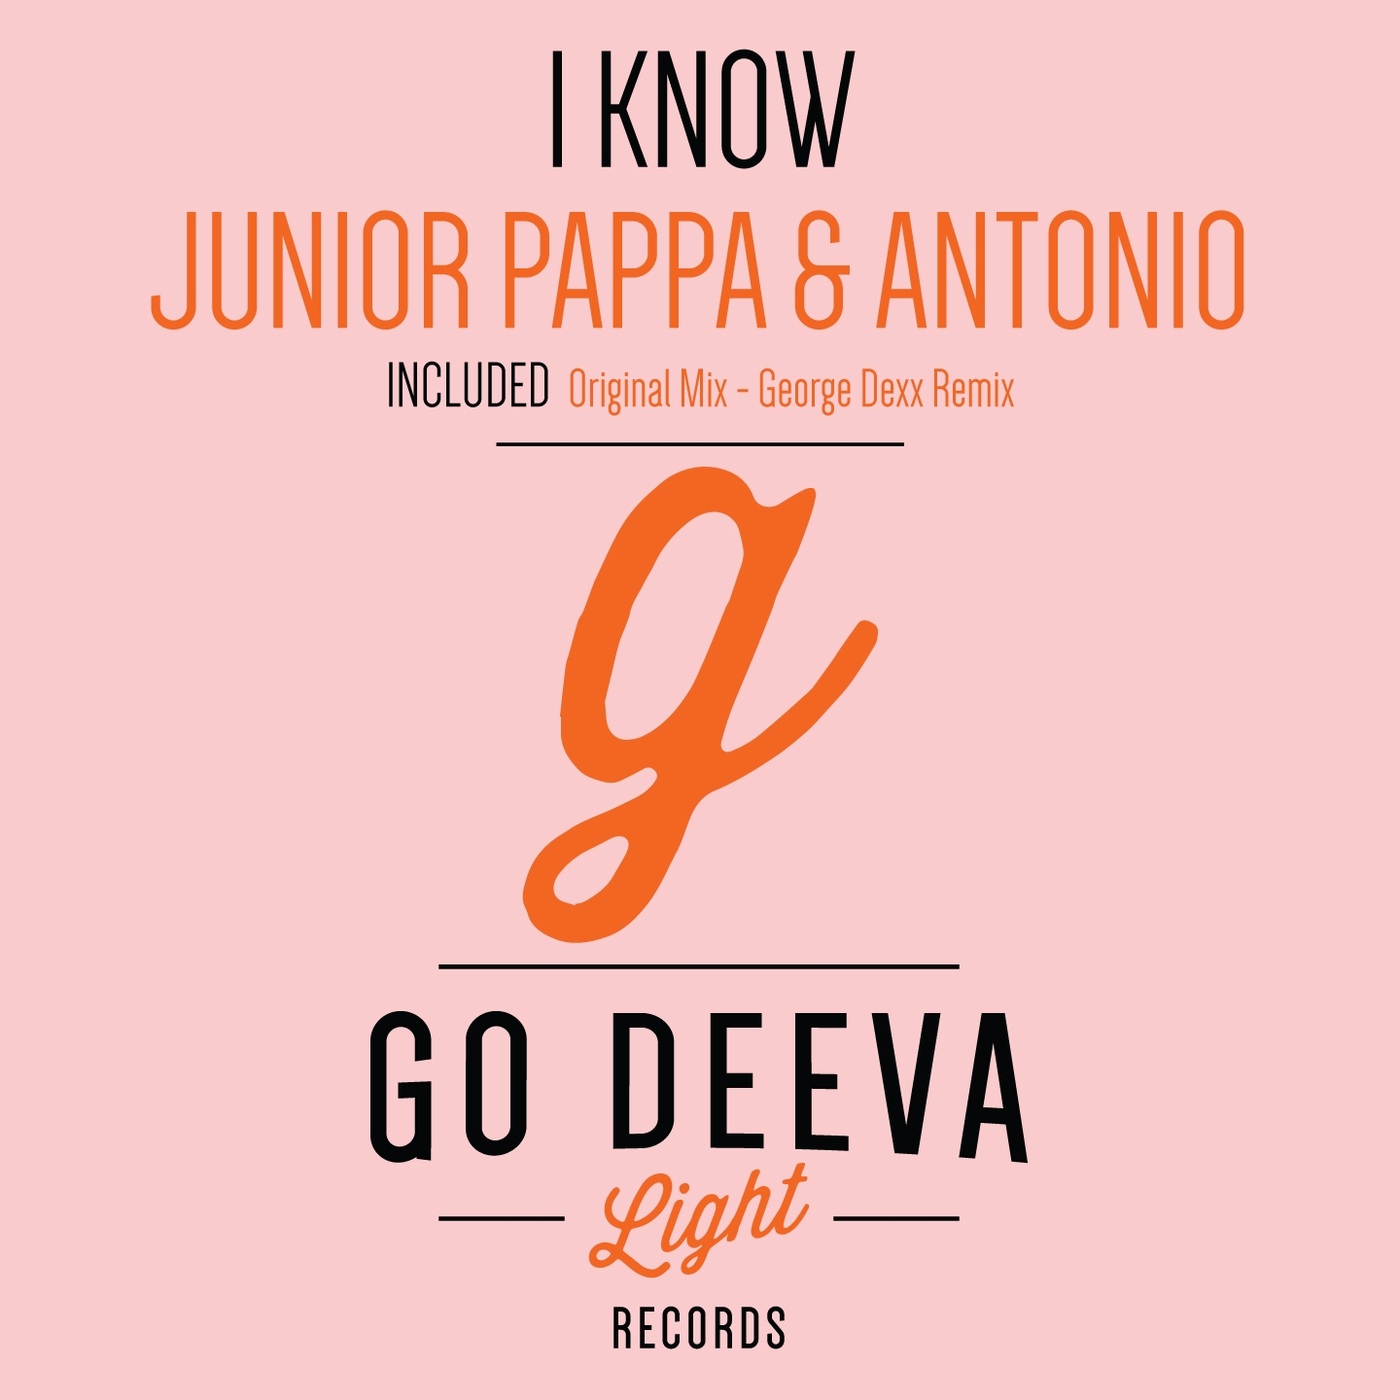 Junior Pappa & Antonio - I Know / Go Deeva Light Records